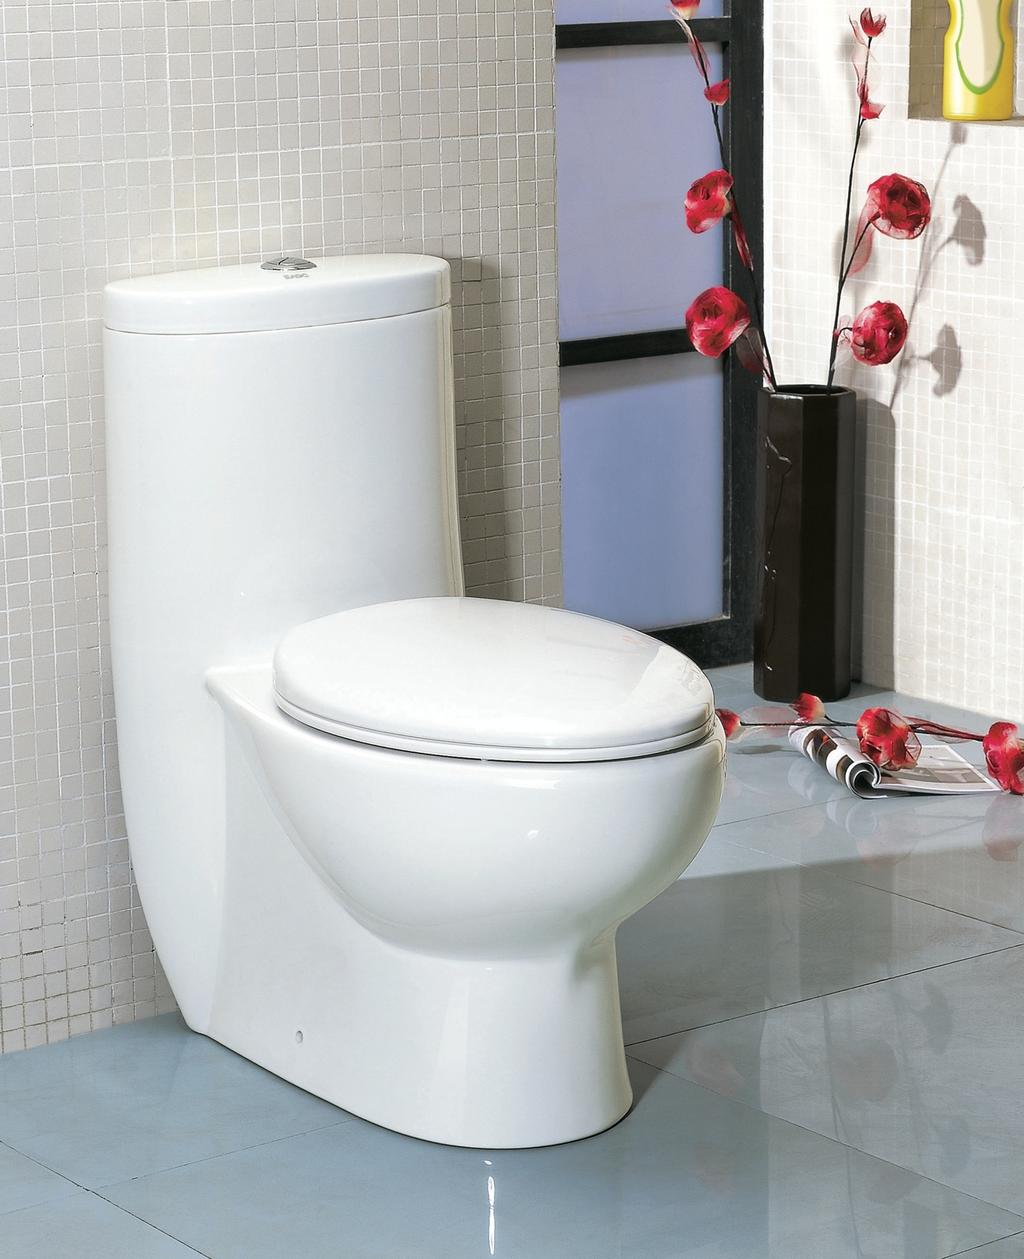 TOILETS ONTARIO EAGO by Adornus Eco friendly dual flush design Jet Siphonic one piece toilet W16 x H28 1/4 x L30 3/4 Bowl height: 16 Water consumption: 3/